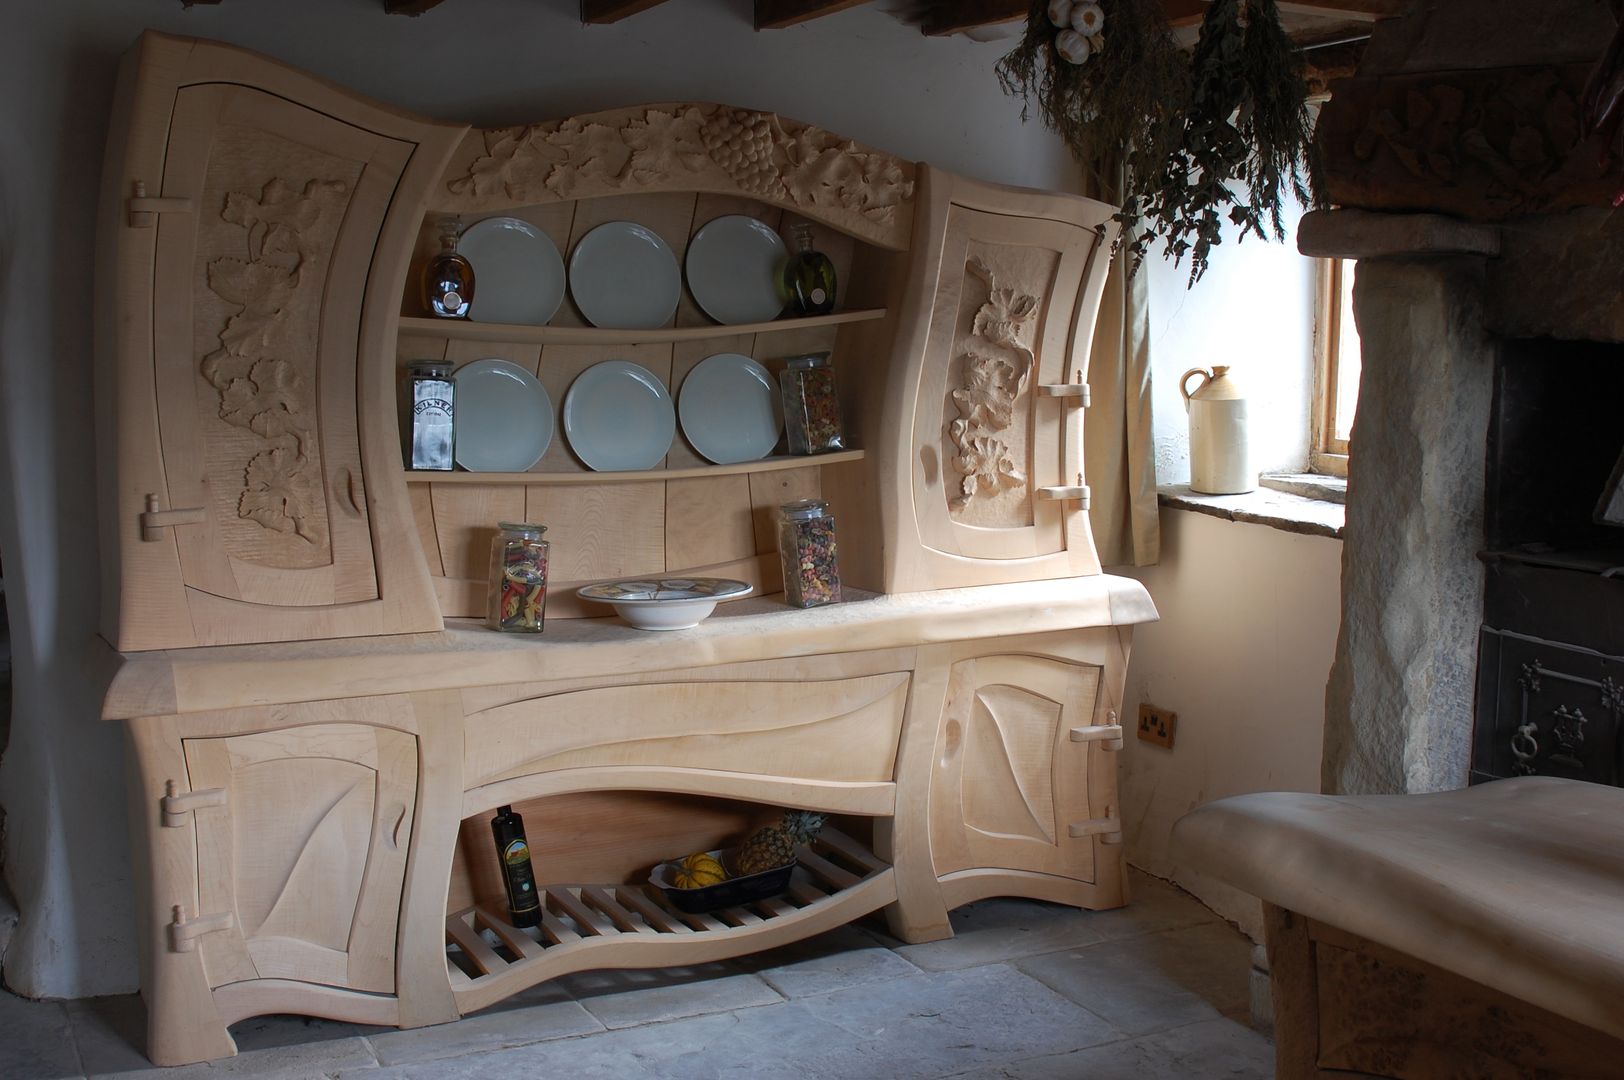 Sculptural Organic Handmade Bespoke kitchen Furniture, Carved Wood Design Bespoke Kitchens. Carved Wood Design Bespoke Kitchens. Cocinas: Ideas, imágenes y decoración Estanterías y despensas